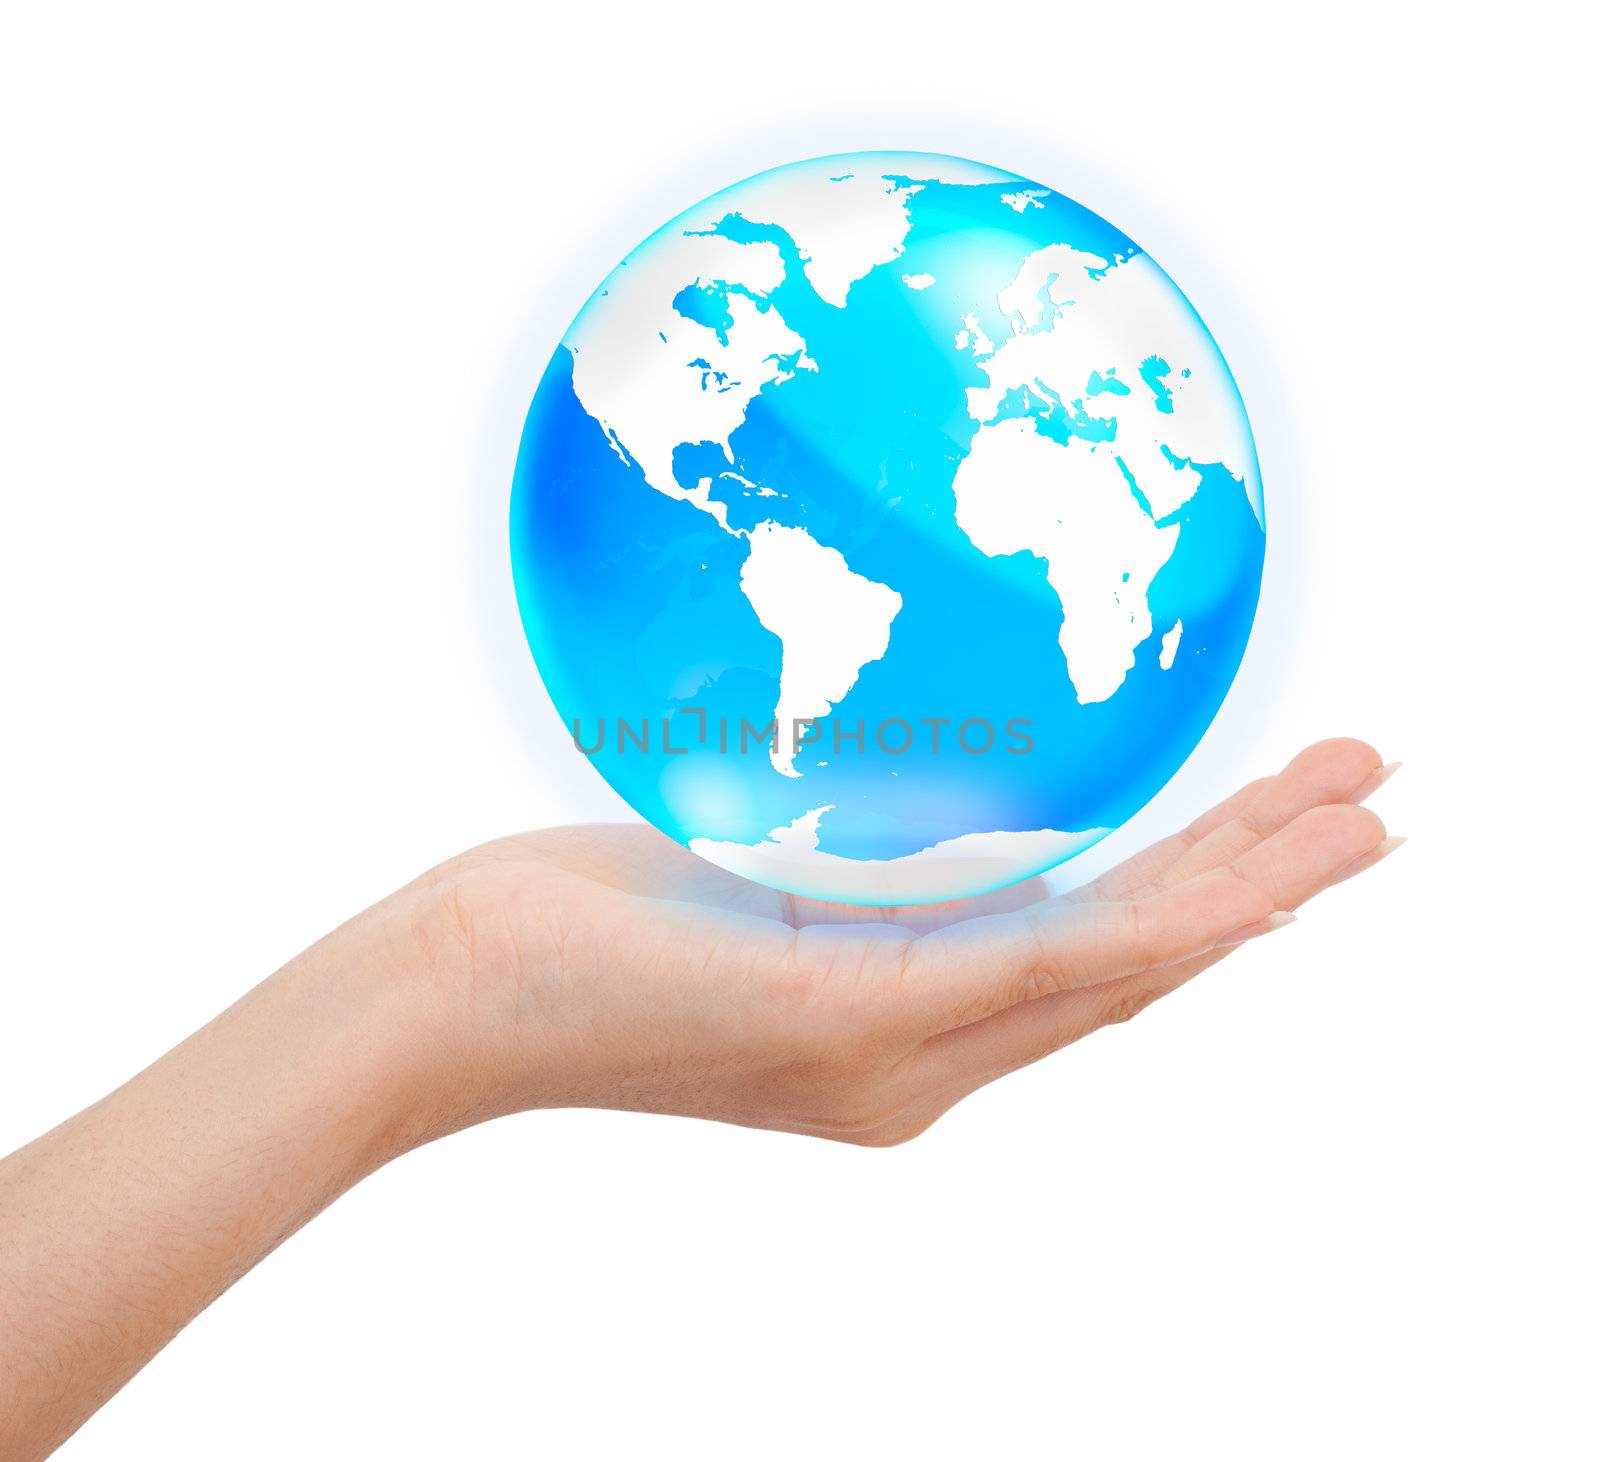 Hand holding crystal globe, Save world concept by Suriyaphoto